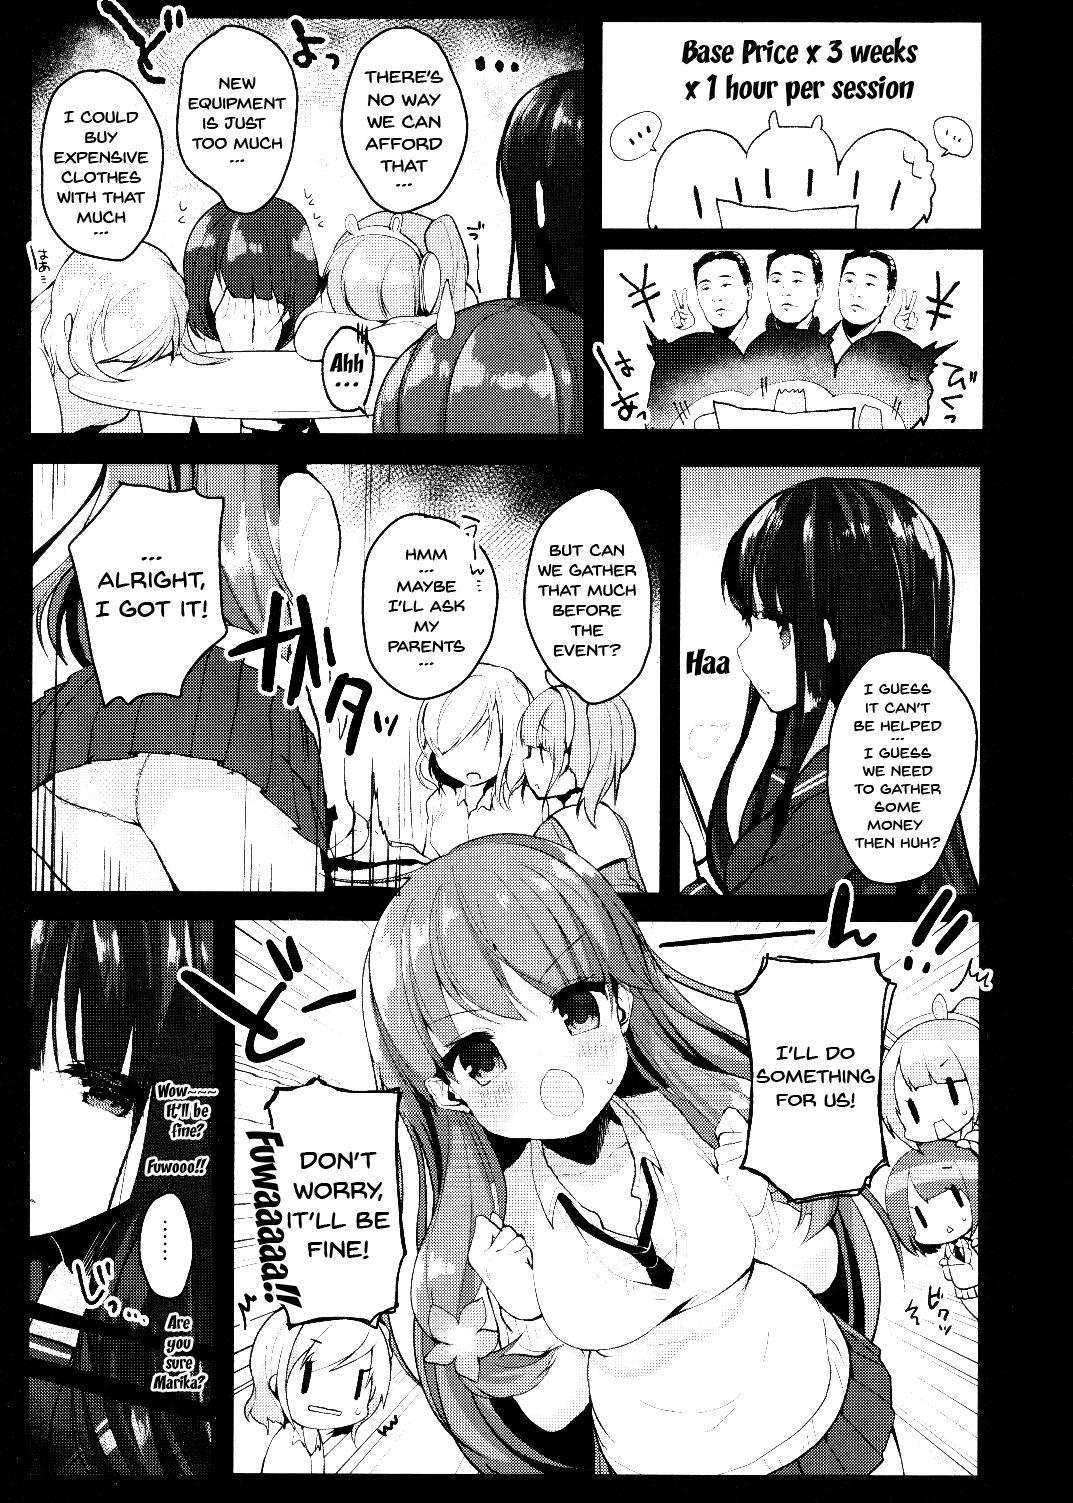 Gay Friend Enkou Shitemo Zettai Daijoubu da yo! ...ne? | Just a little compensated dating will be okay!... Right? - Hinabita Blowing - Page 5